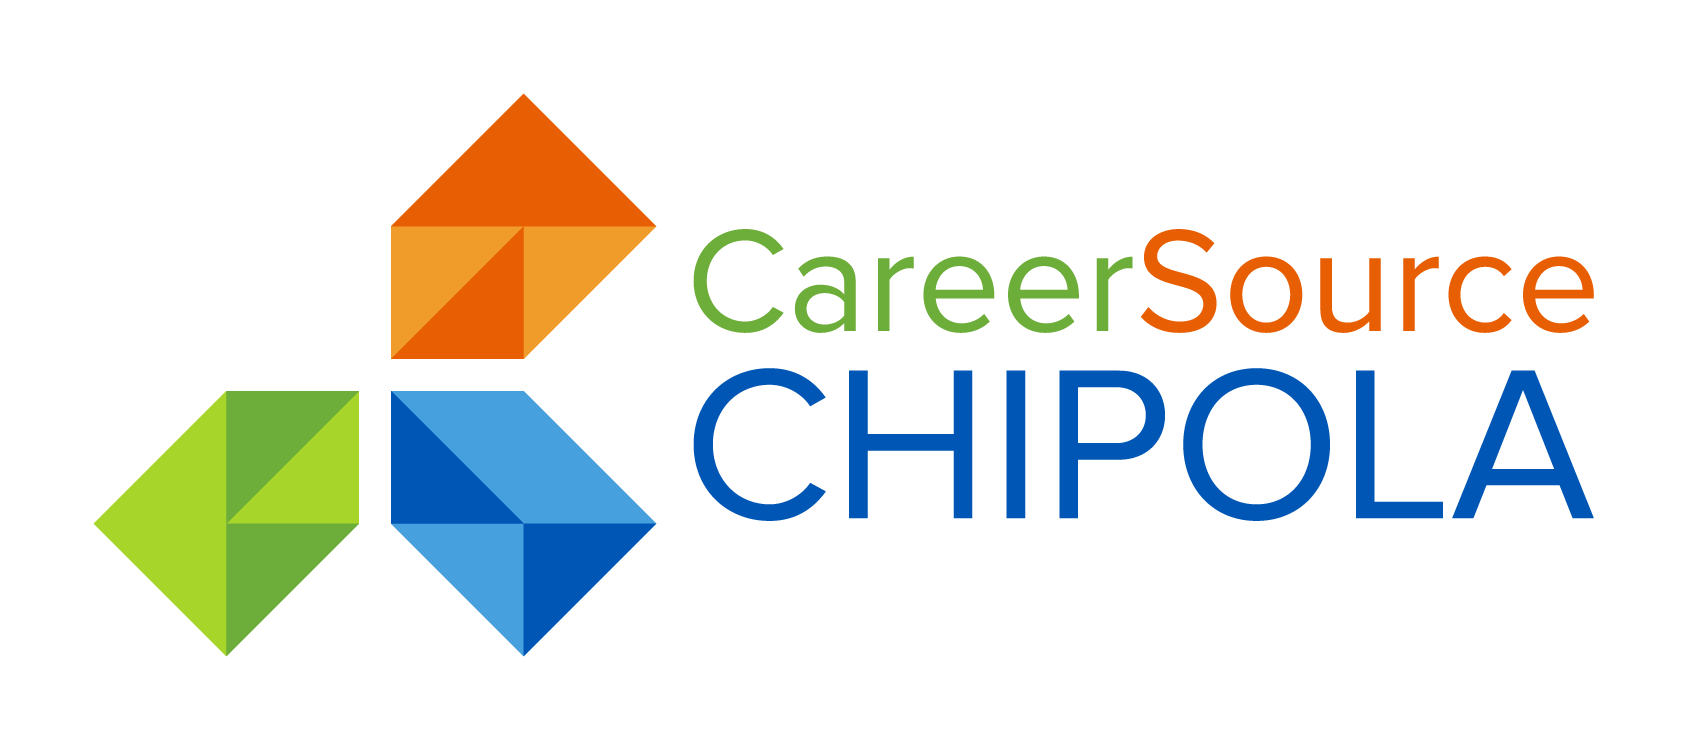 CareerSource Chipola logo